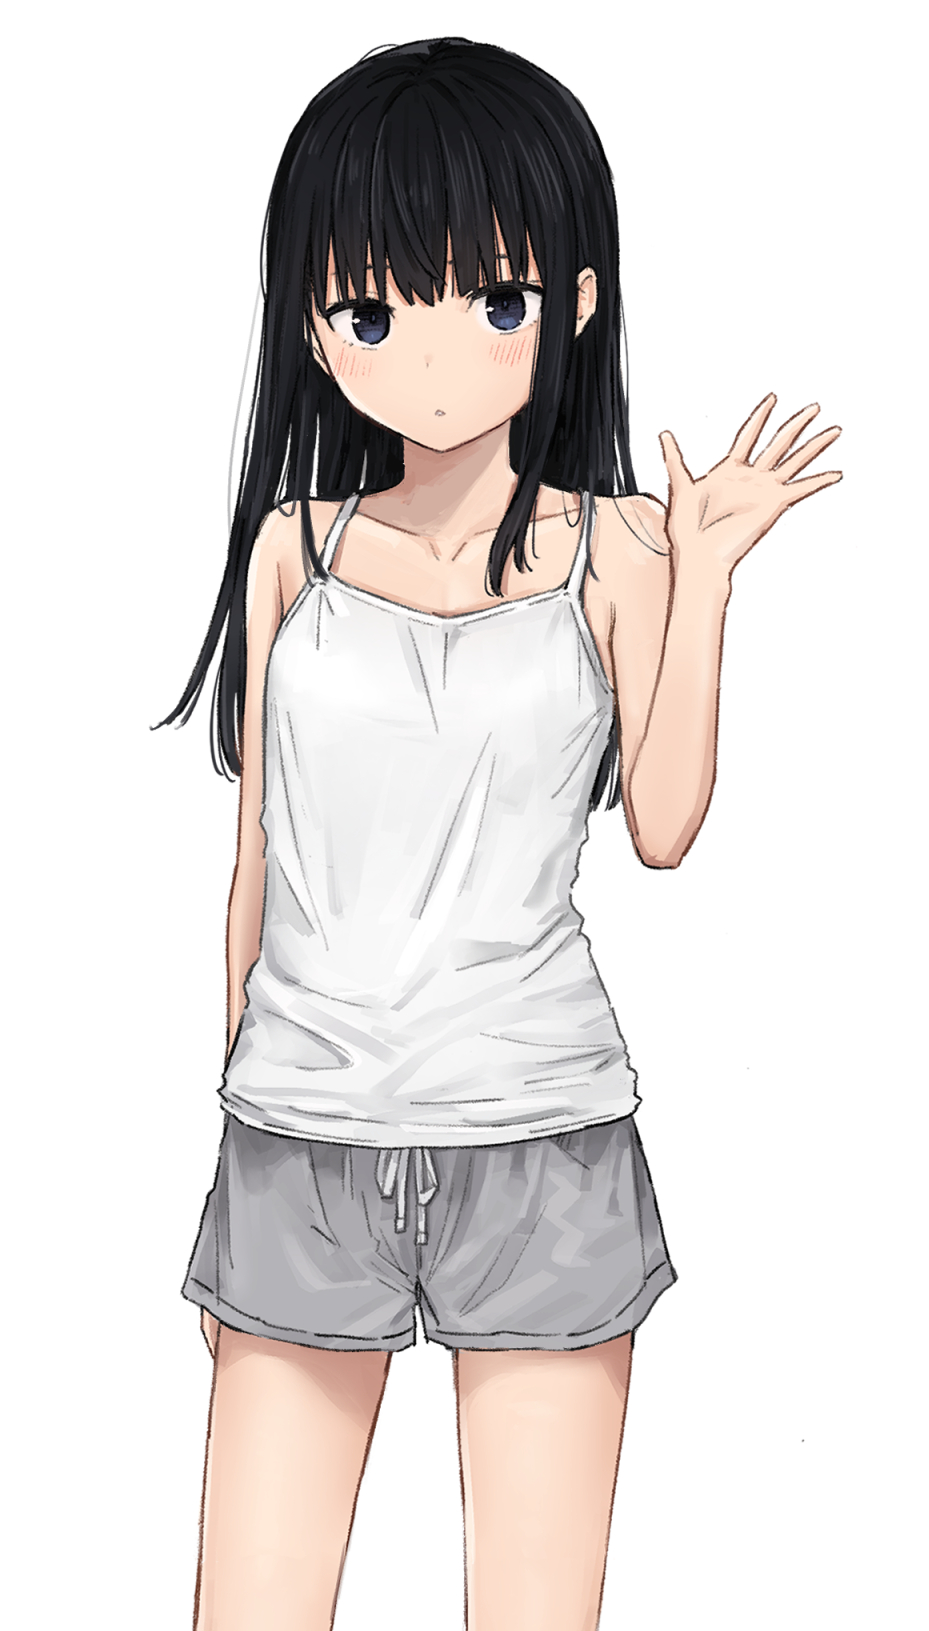 Anime 929x1631 anime anime girls digital art artwork 2D portrait display Zuima black hair dark eyes shorts tank top loli frontal view